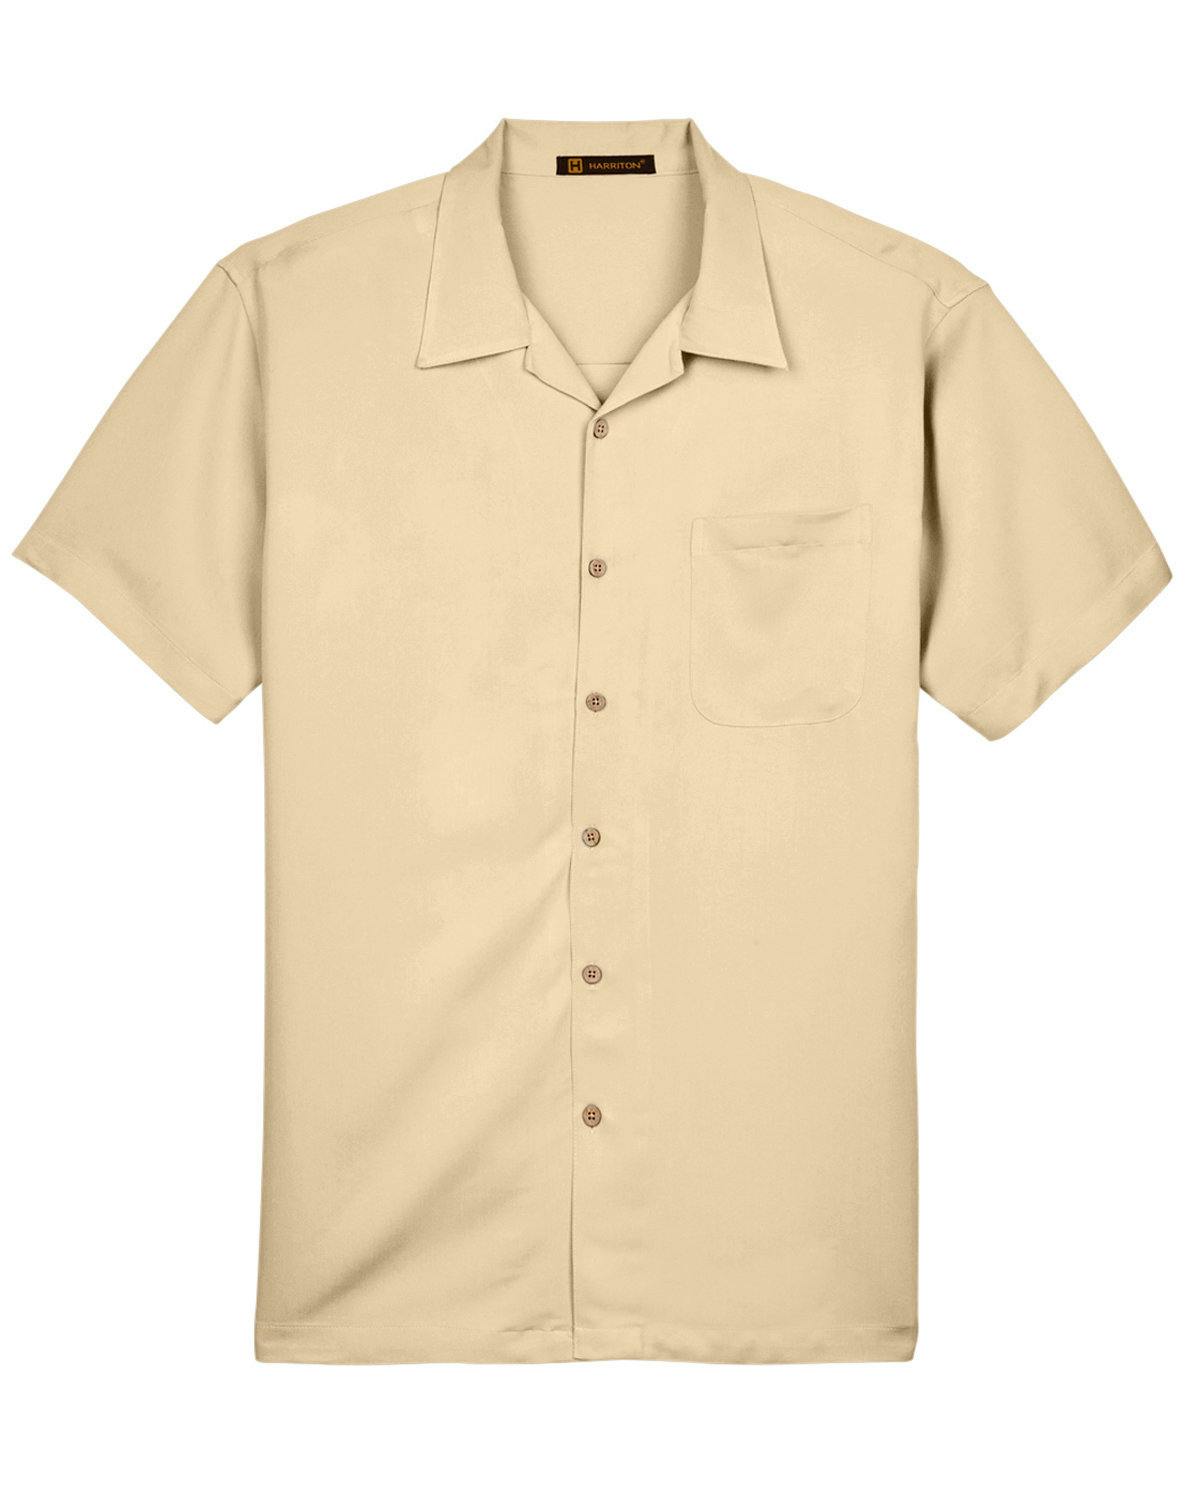 Image for Men's Bahama Cord Camp Shirt